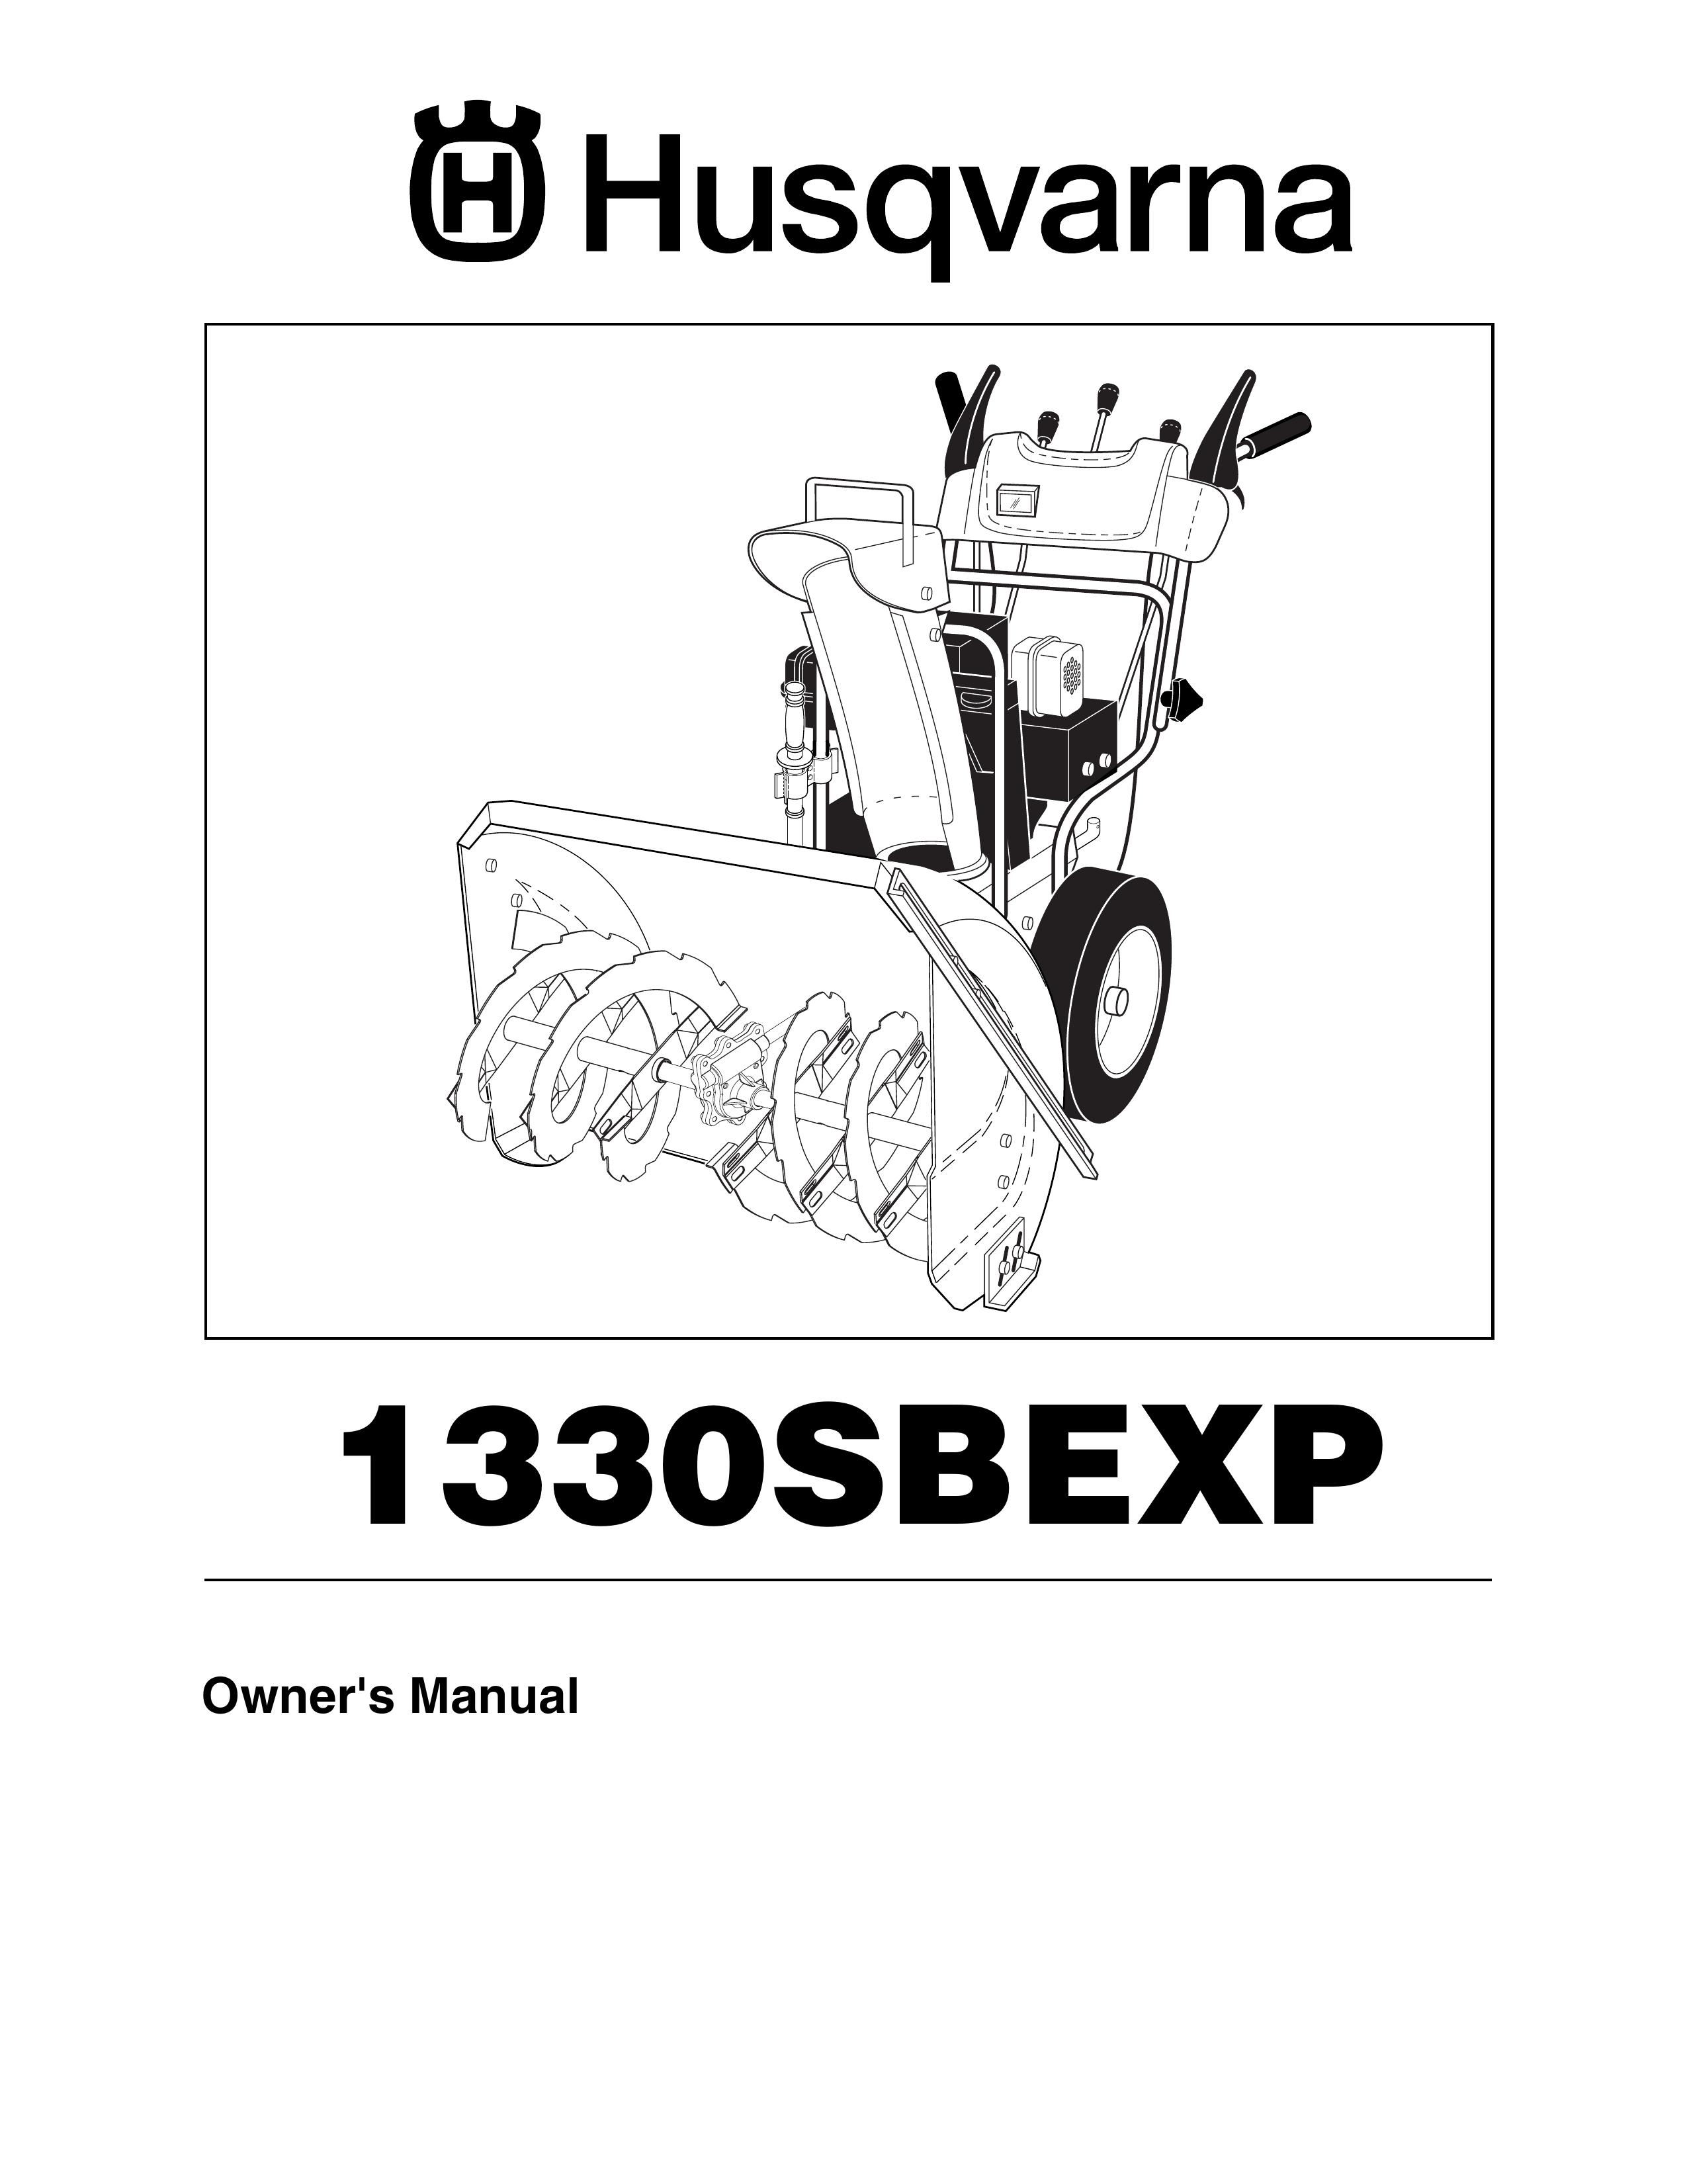 Husqvarna 1330SBEXP Snow Blower User Manual